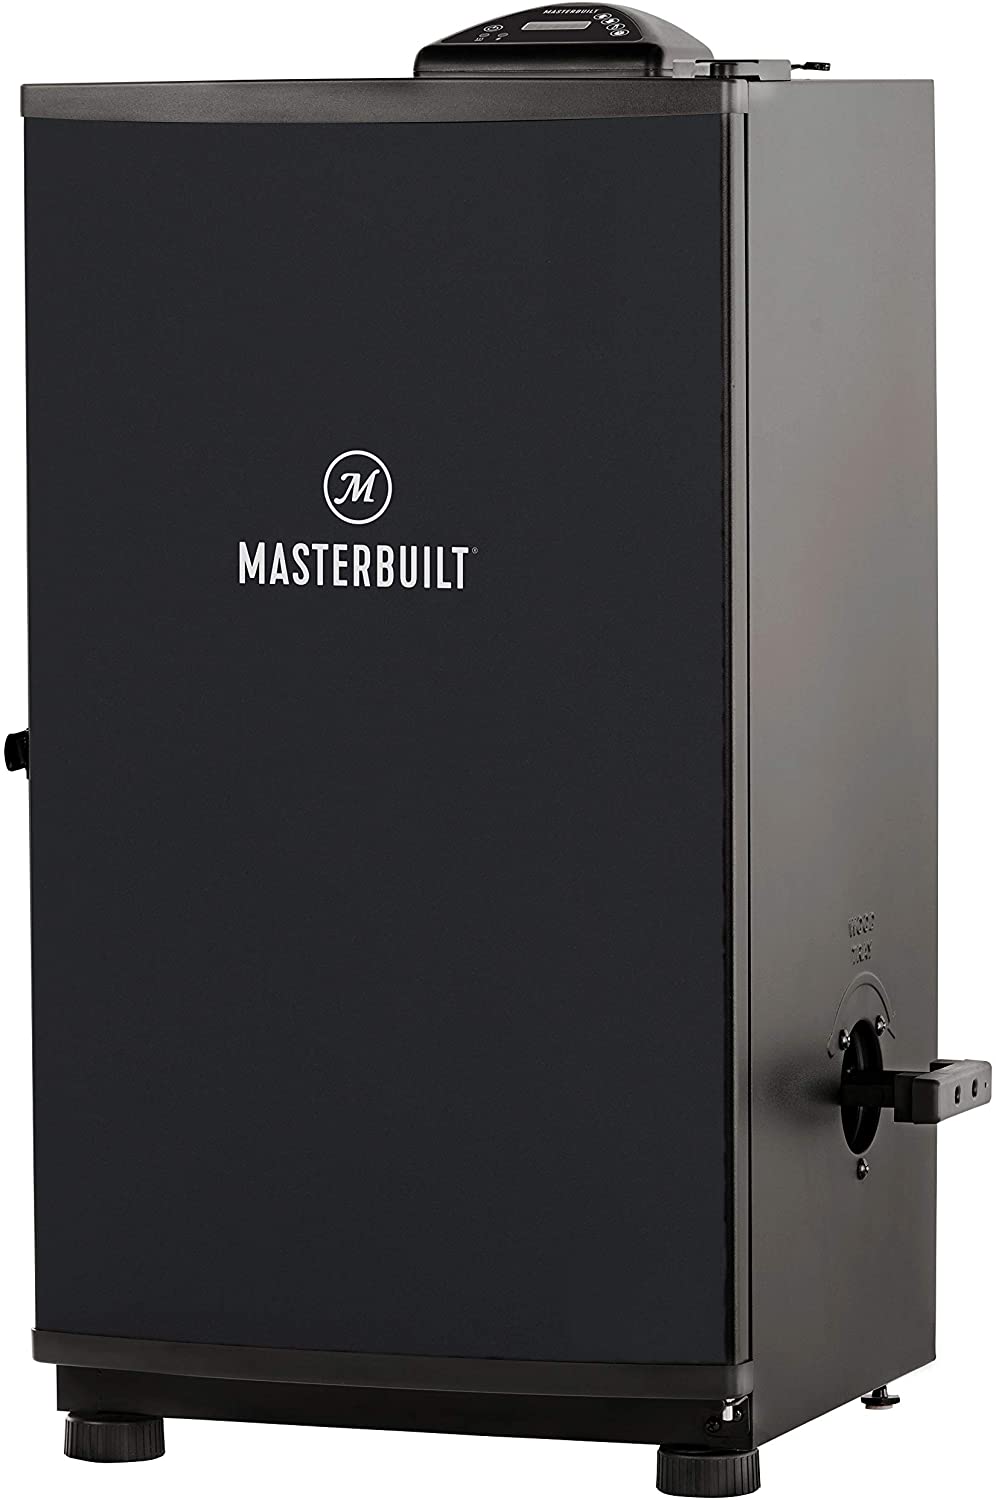 Masterbuilt MB20071117 Digital Electric Smoker